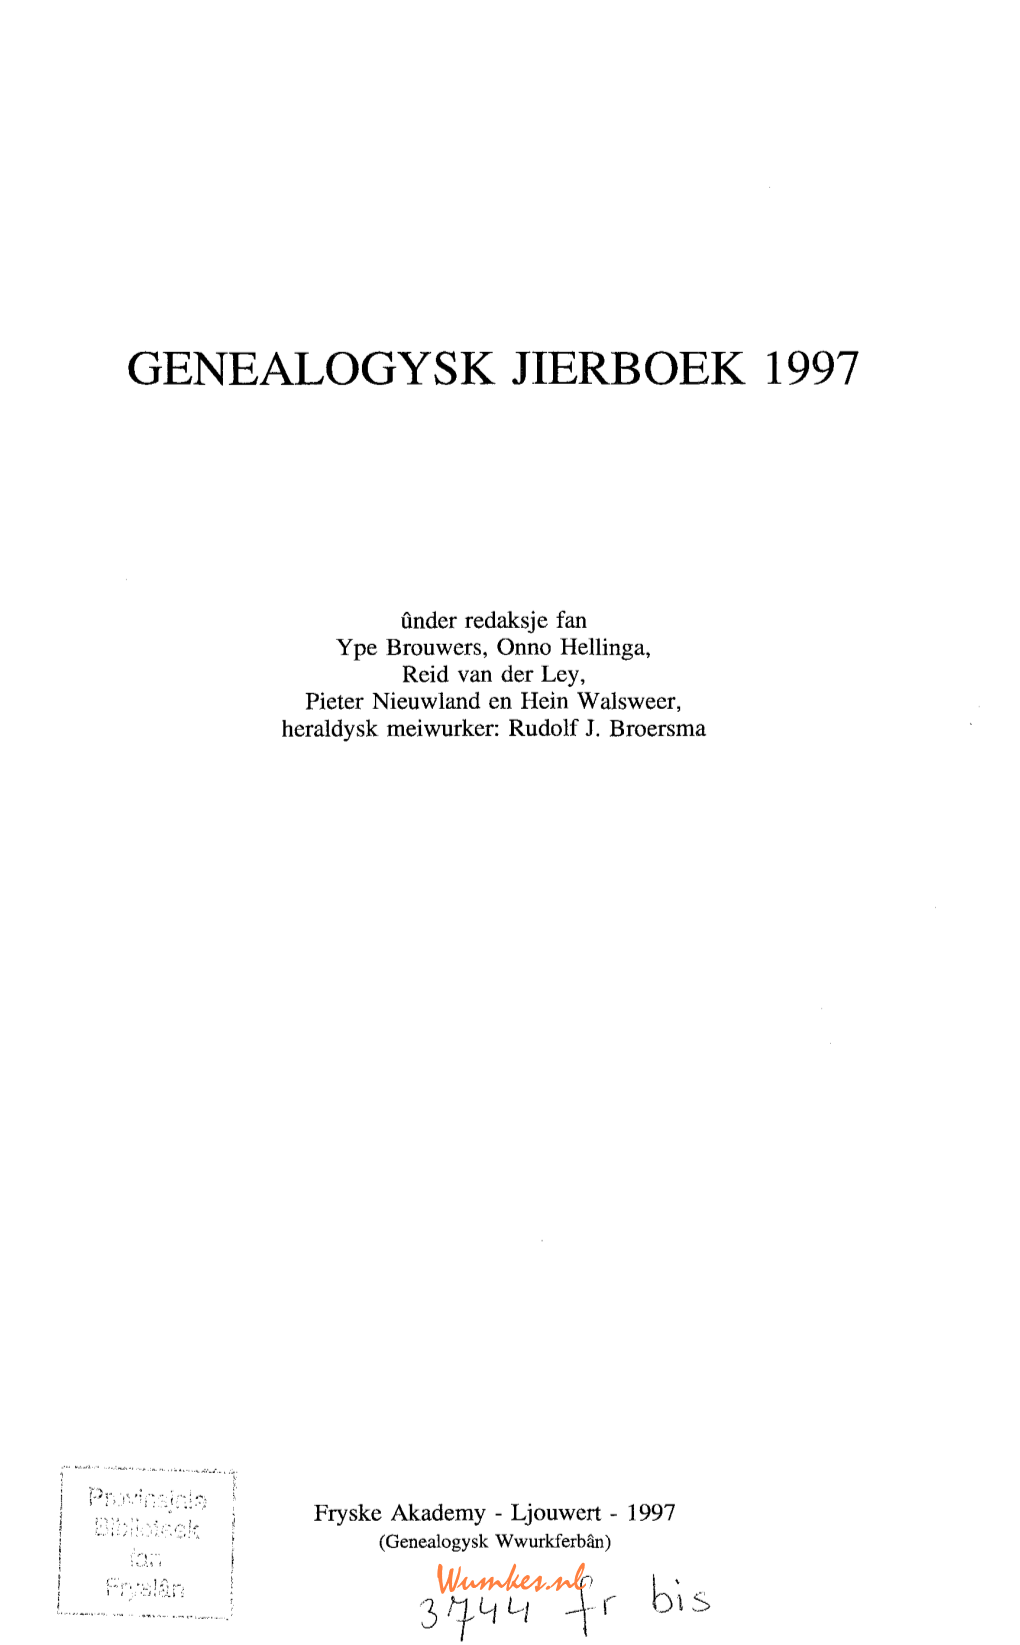 Genealogysk Jierboek 1997